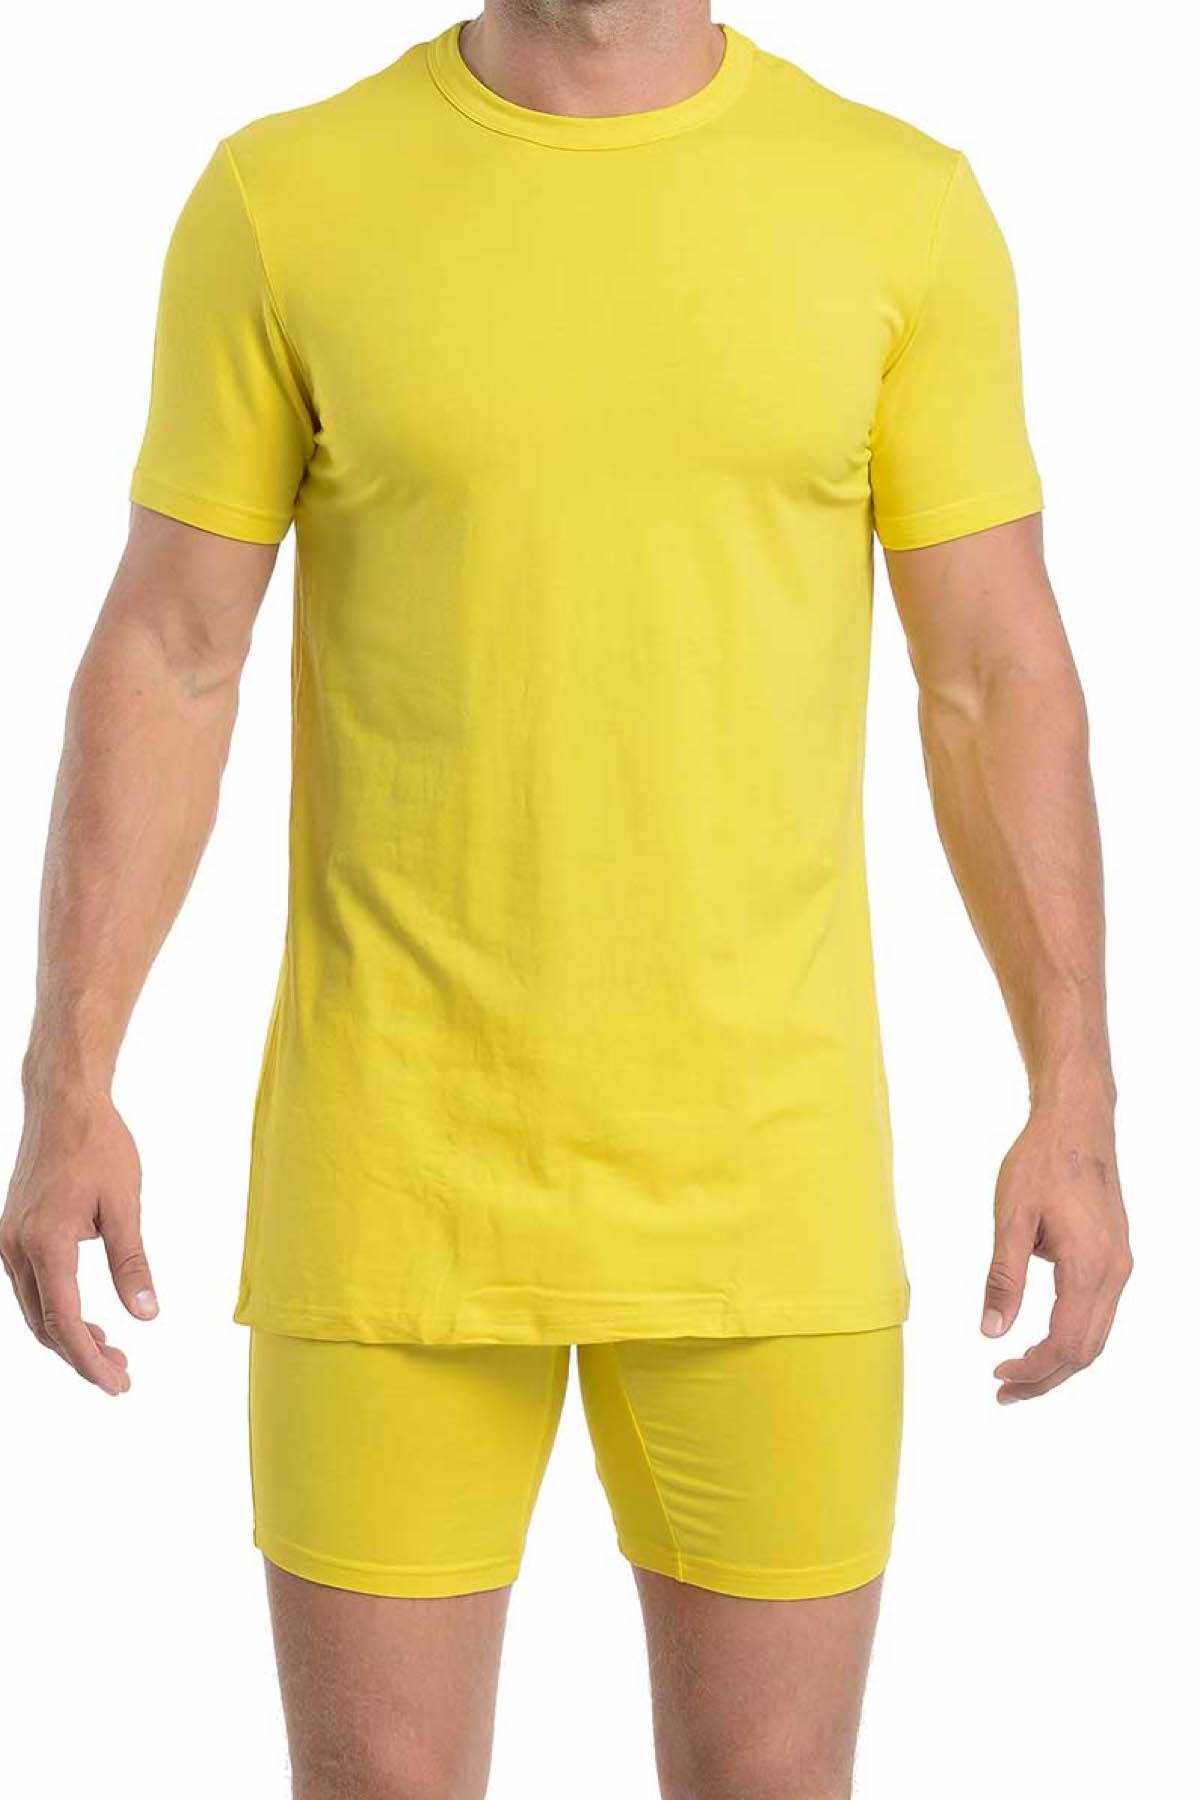 Wood Yellow Shirt